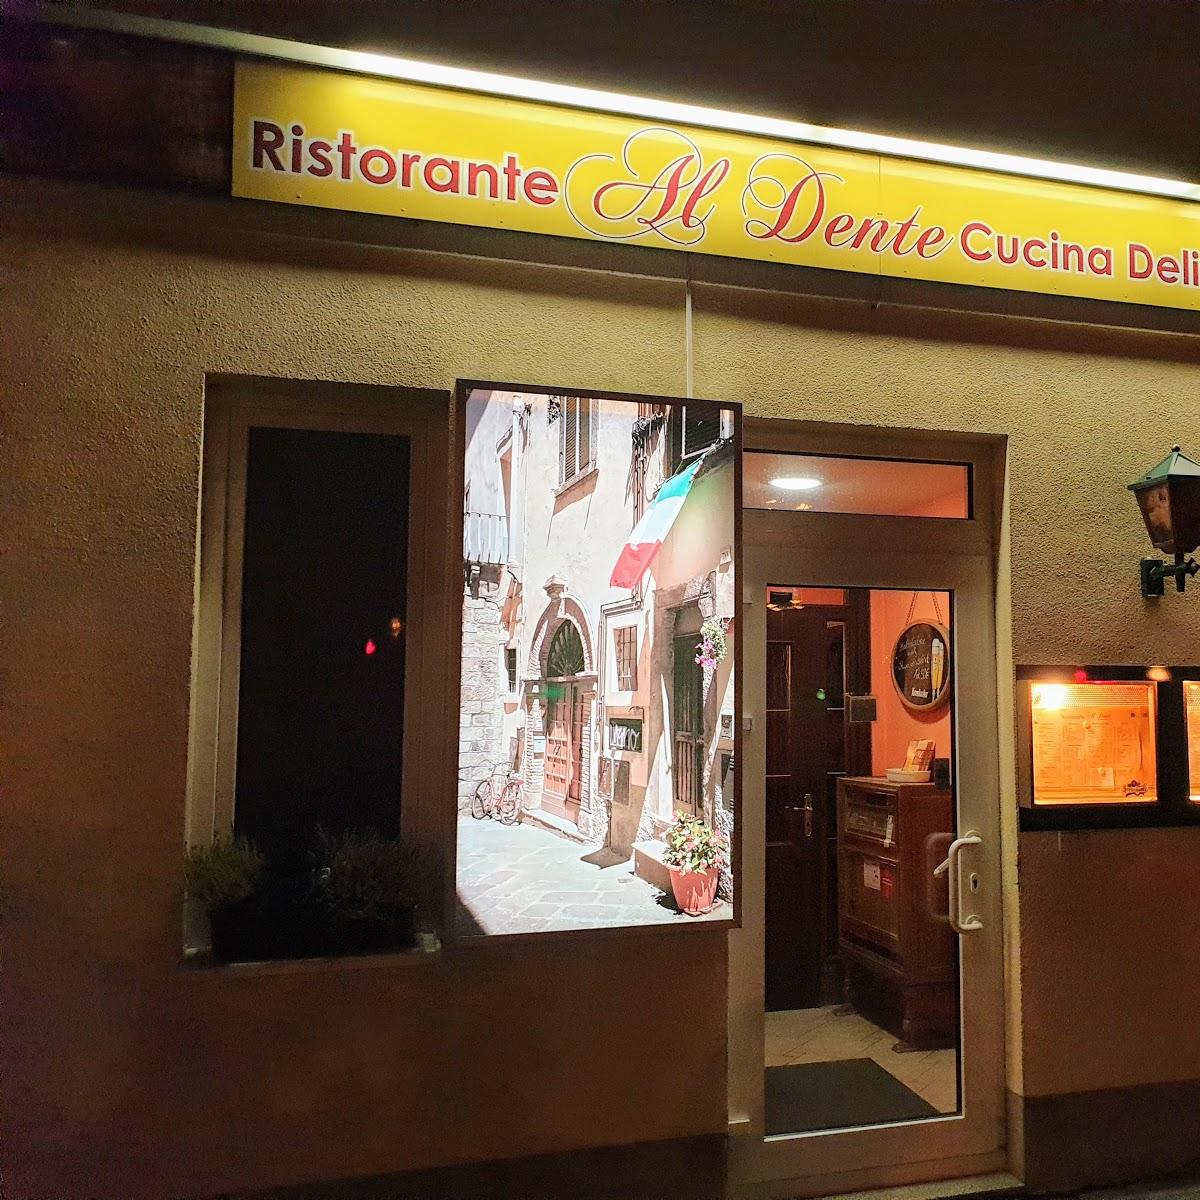 Restaurant "Ristorante Al Dente Cucina Delicatezza" in Döbeln